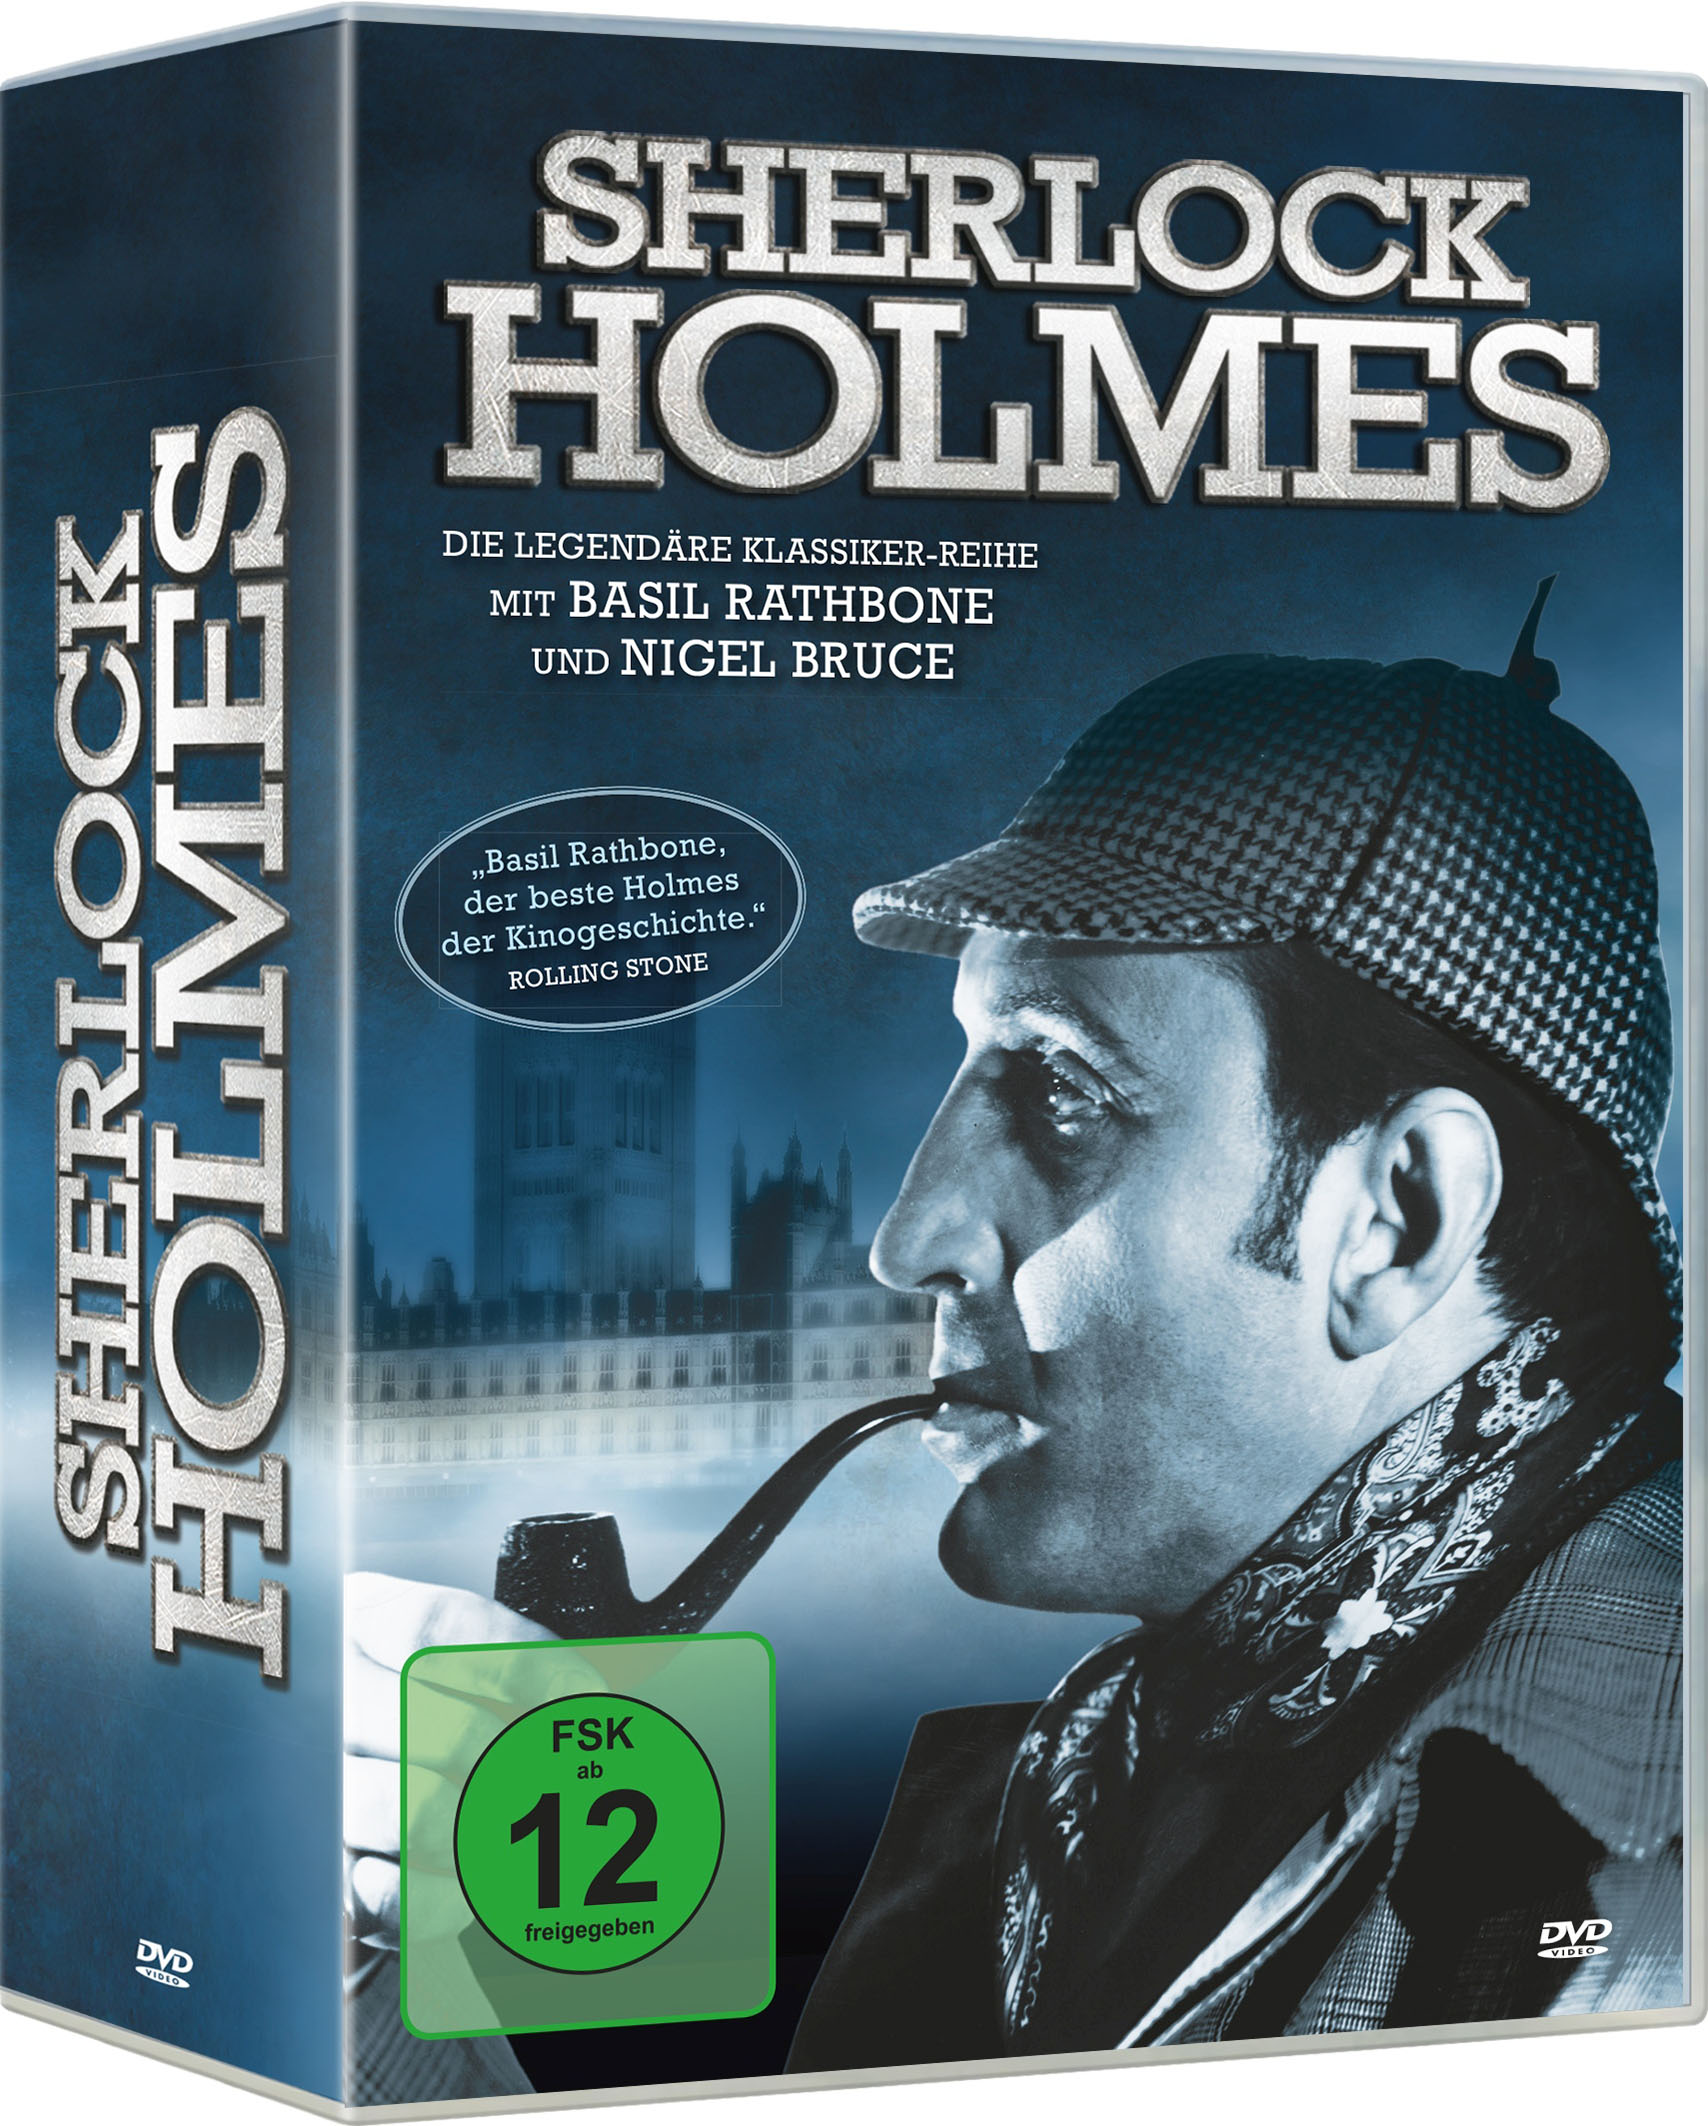 Sherlock Holmes Edition (Keepcase) (DVD) Image 2